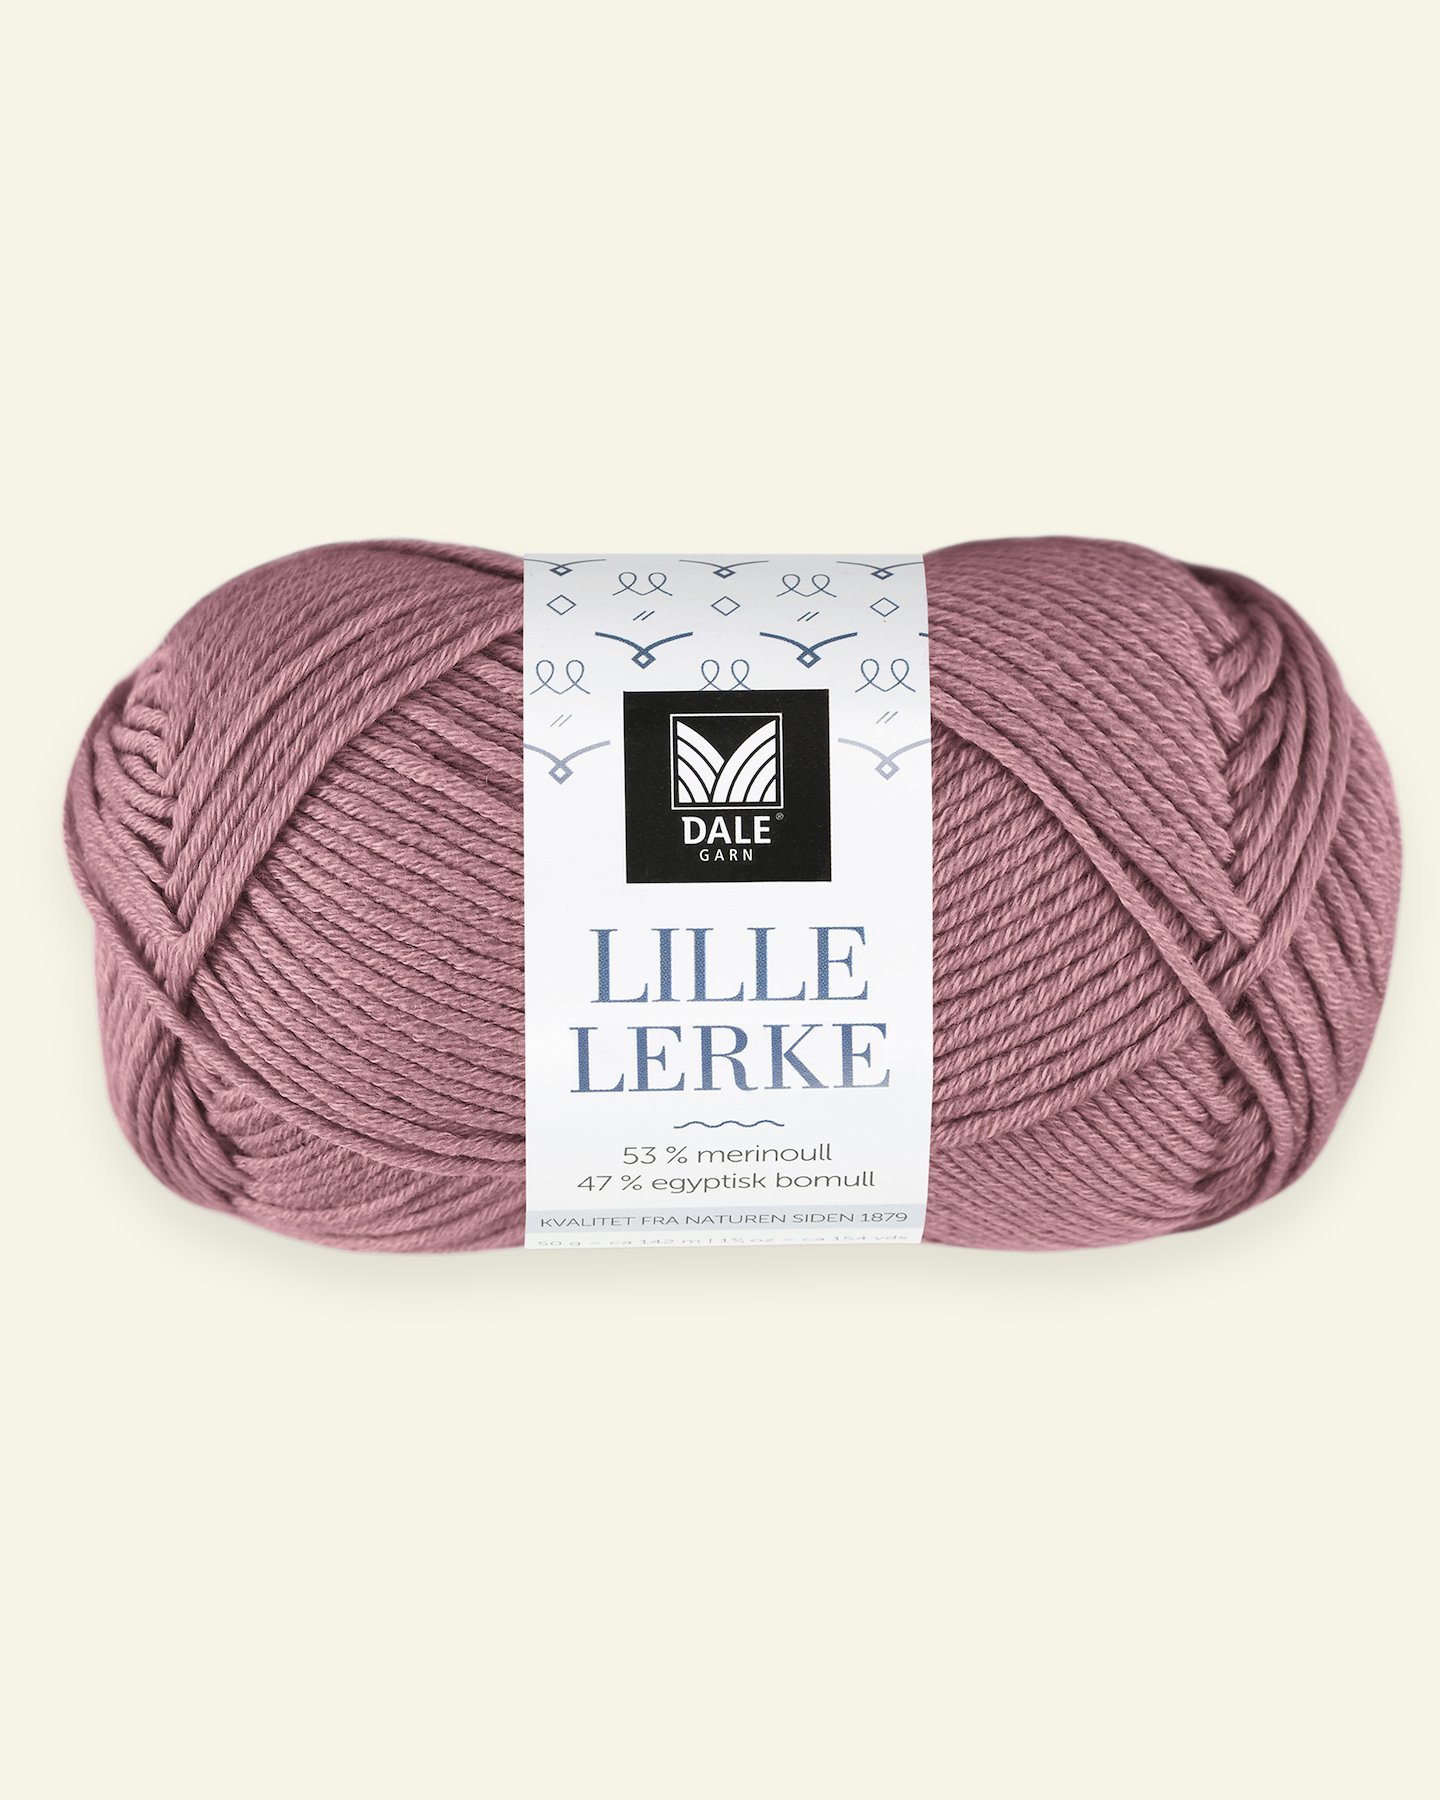 Dale Garn, merino/cotton yarn "Lille Lerke", dusty old rose (8104) 90000405_pack